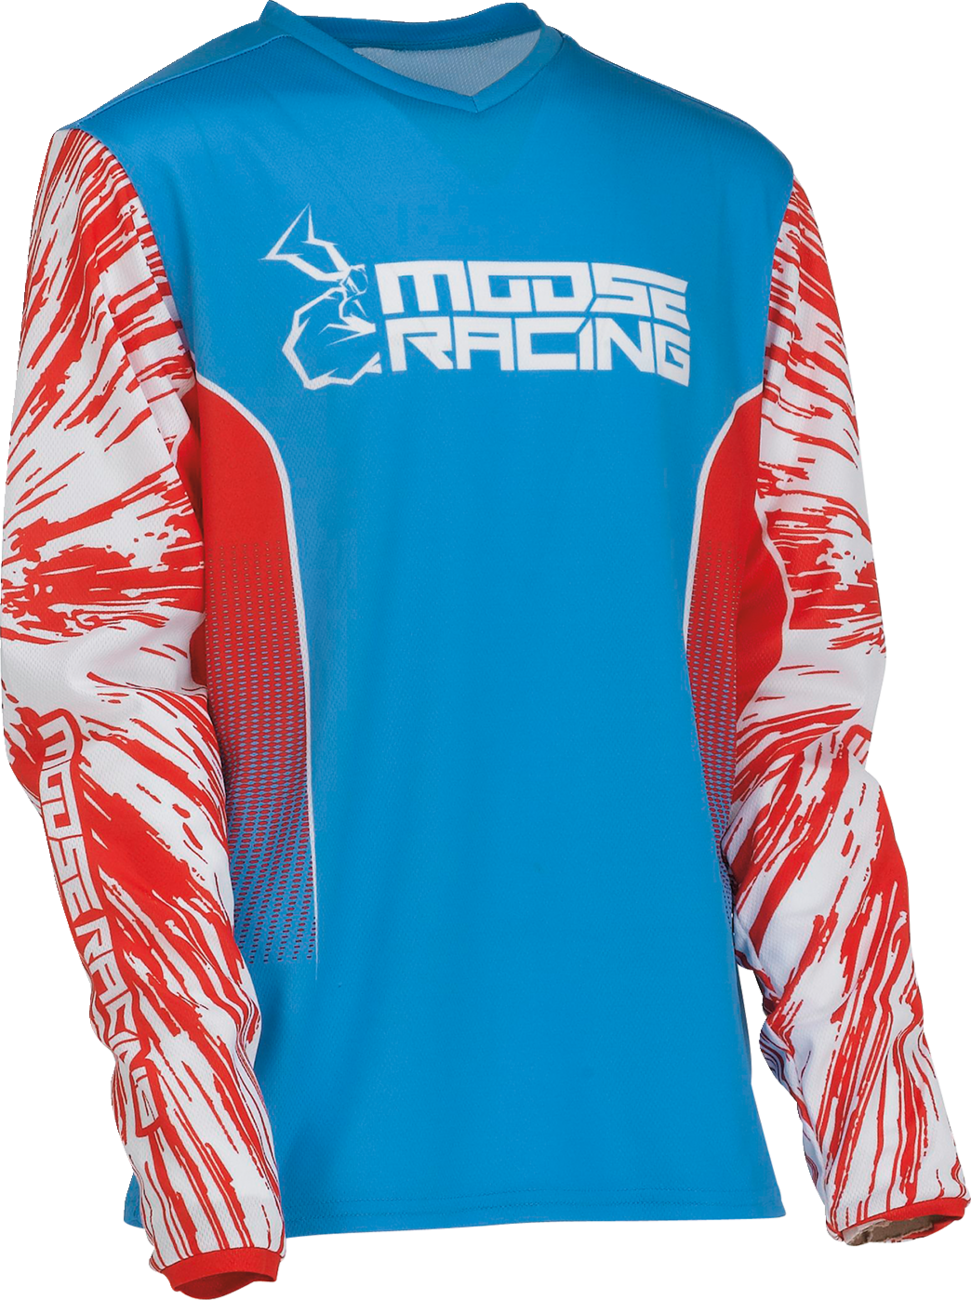 Camiseta juvenil MOOSE RACING Agroid - Rojo/Blanco/Azul - XL 2912-2265 